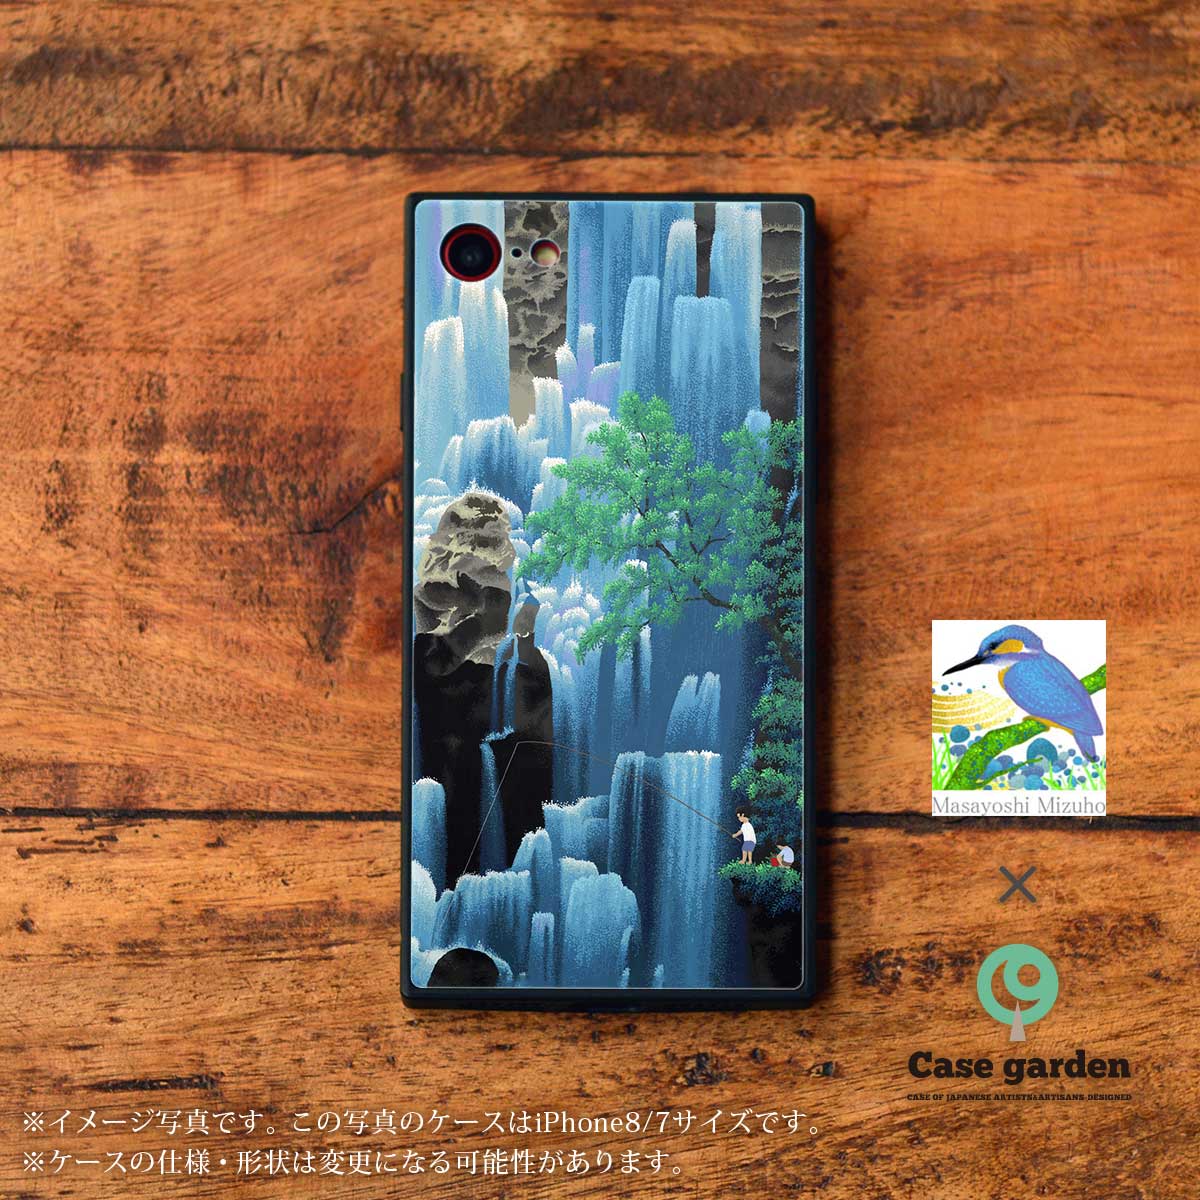 Masayoshi Mizuhoデザインの、キラキラと輝く背面カバーのガラスが美しいスクエア型強化ガラススマホケース「源五郎ヶ滝の釣り」です。写真の機種はiPhoneXRです。